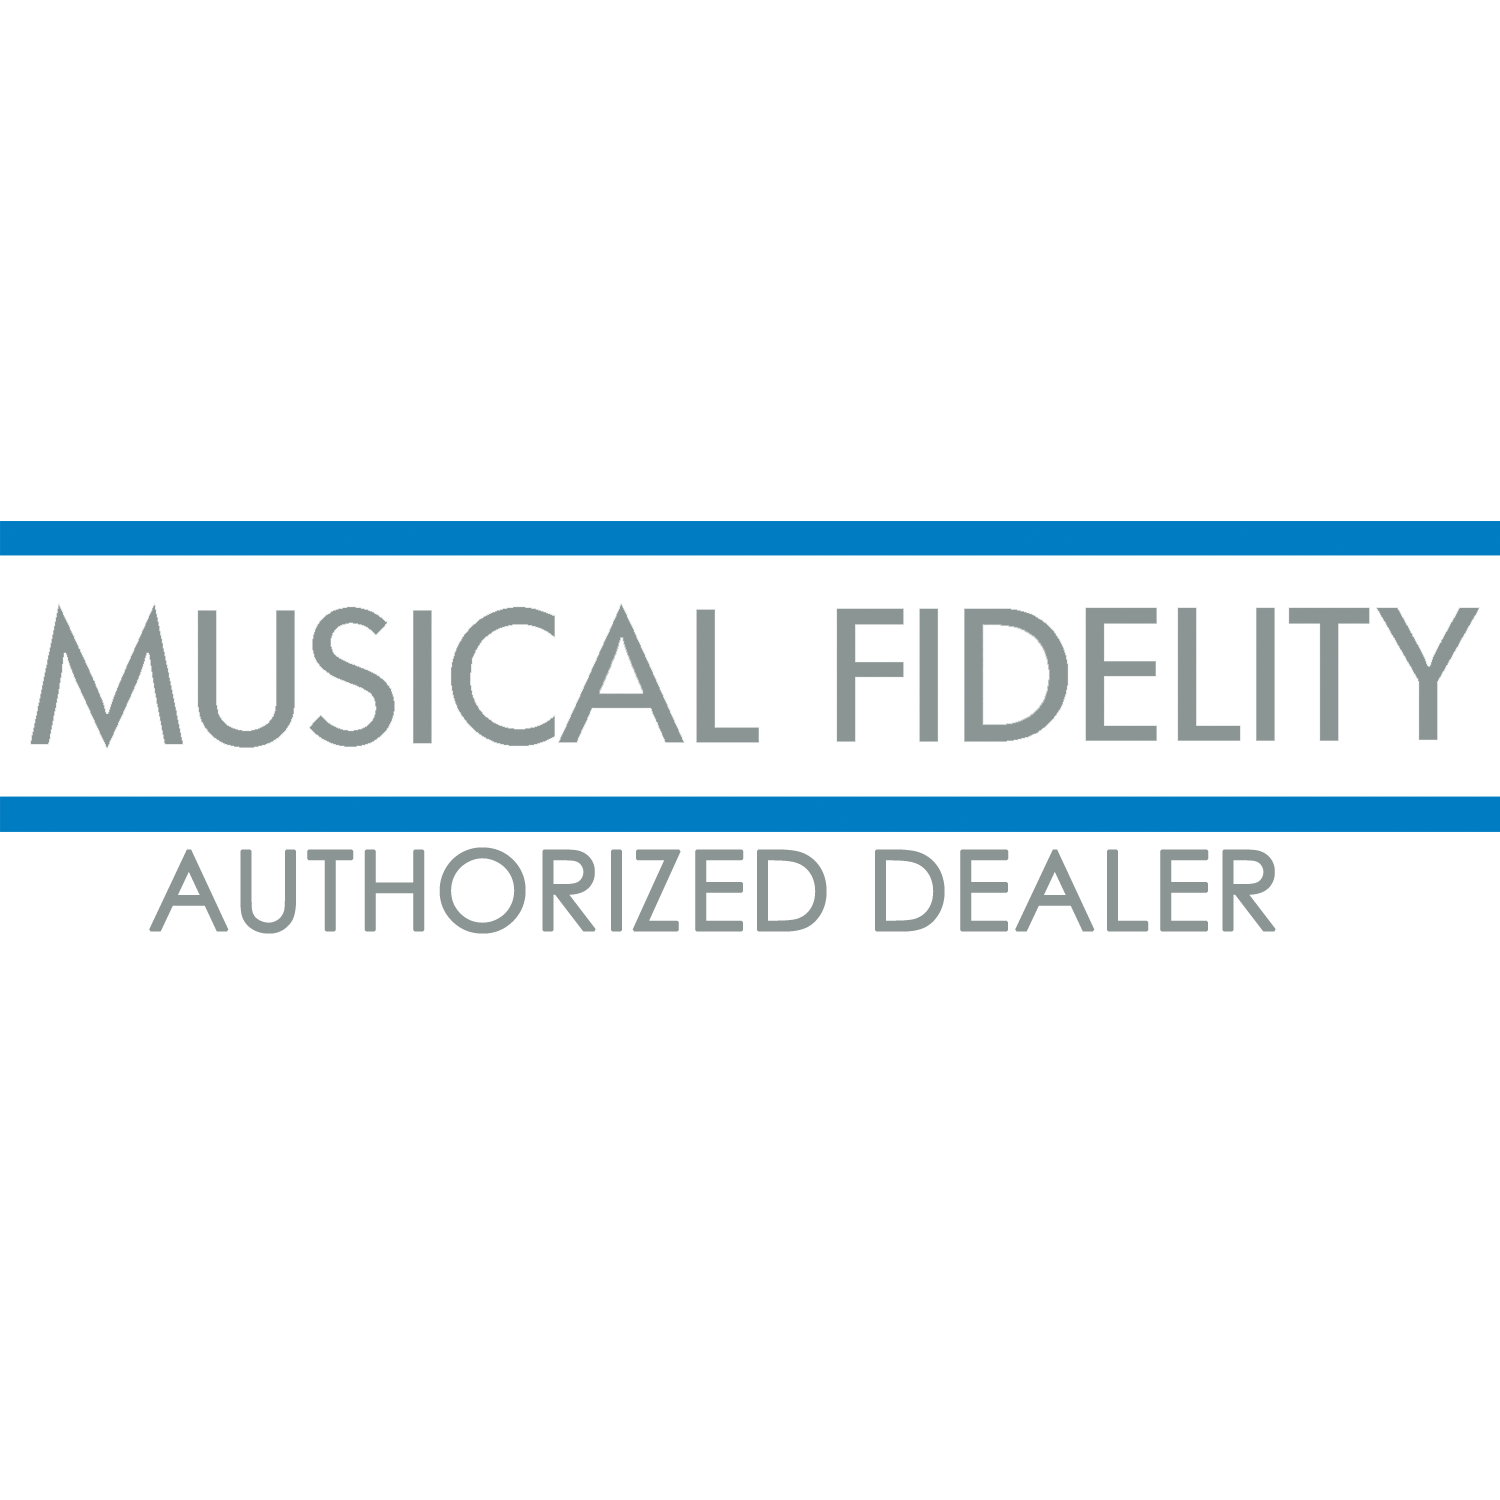 MUSICAL FIDELITY Authorized Dealer Logo